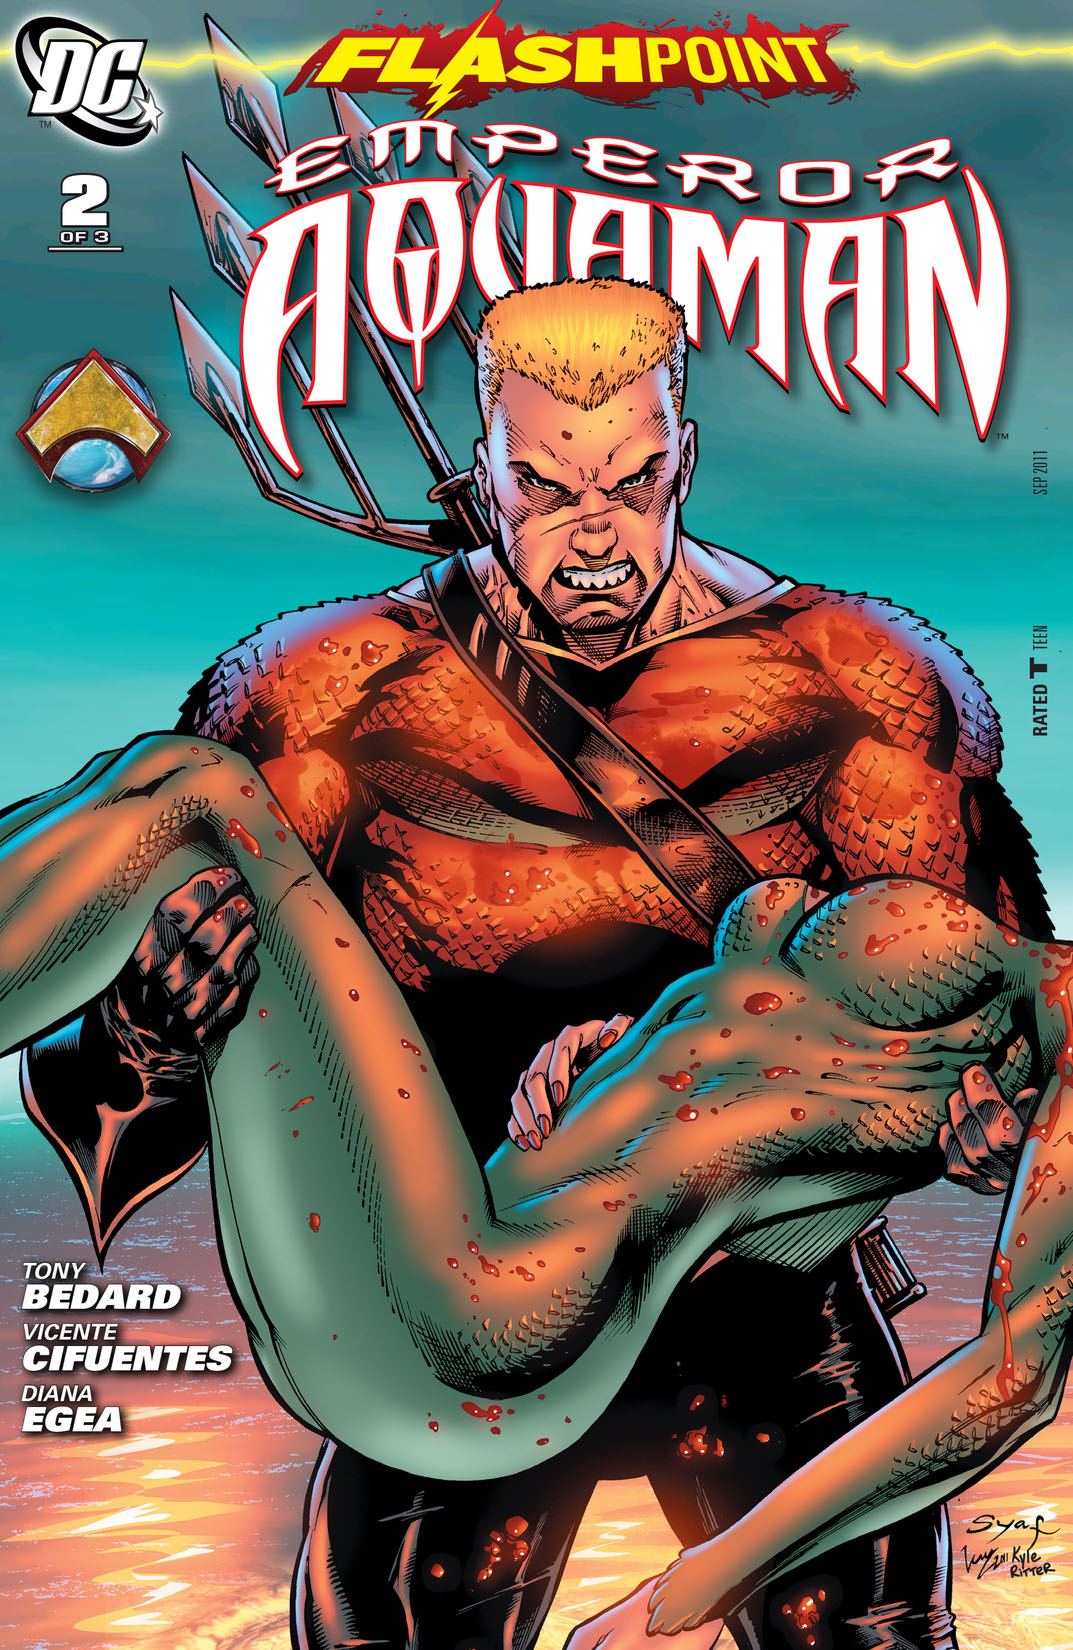 Flashpoint: Emperor Aquaman #2 preview images